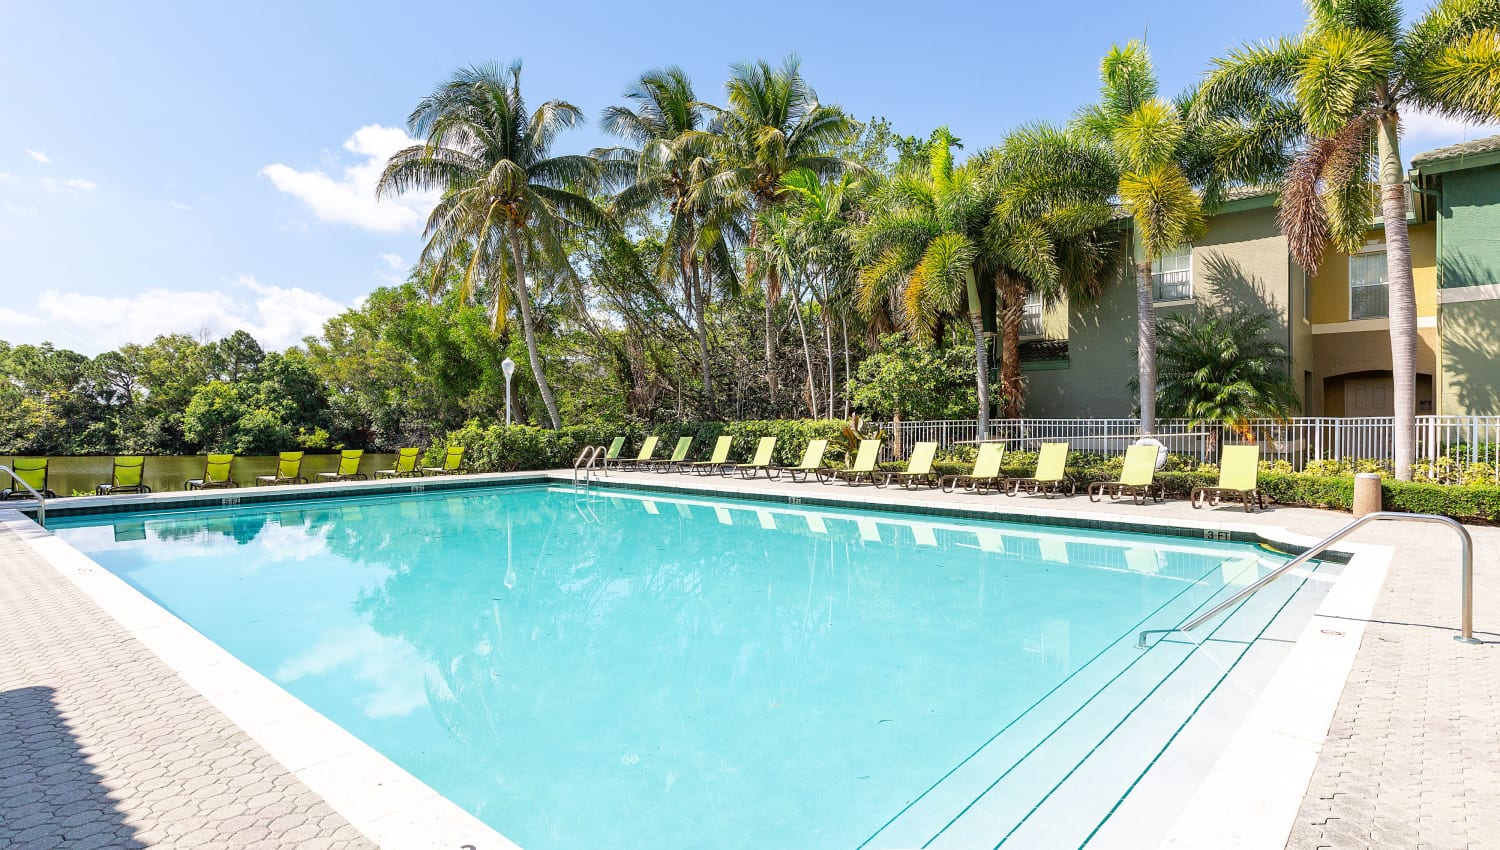 Sparkling pool at Quantum Lake Villas Apartments in Boynton Beach, Florida